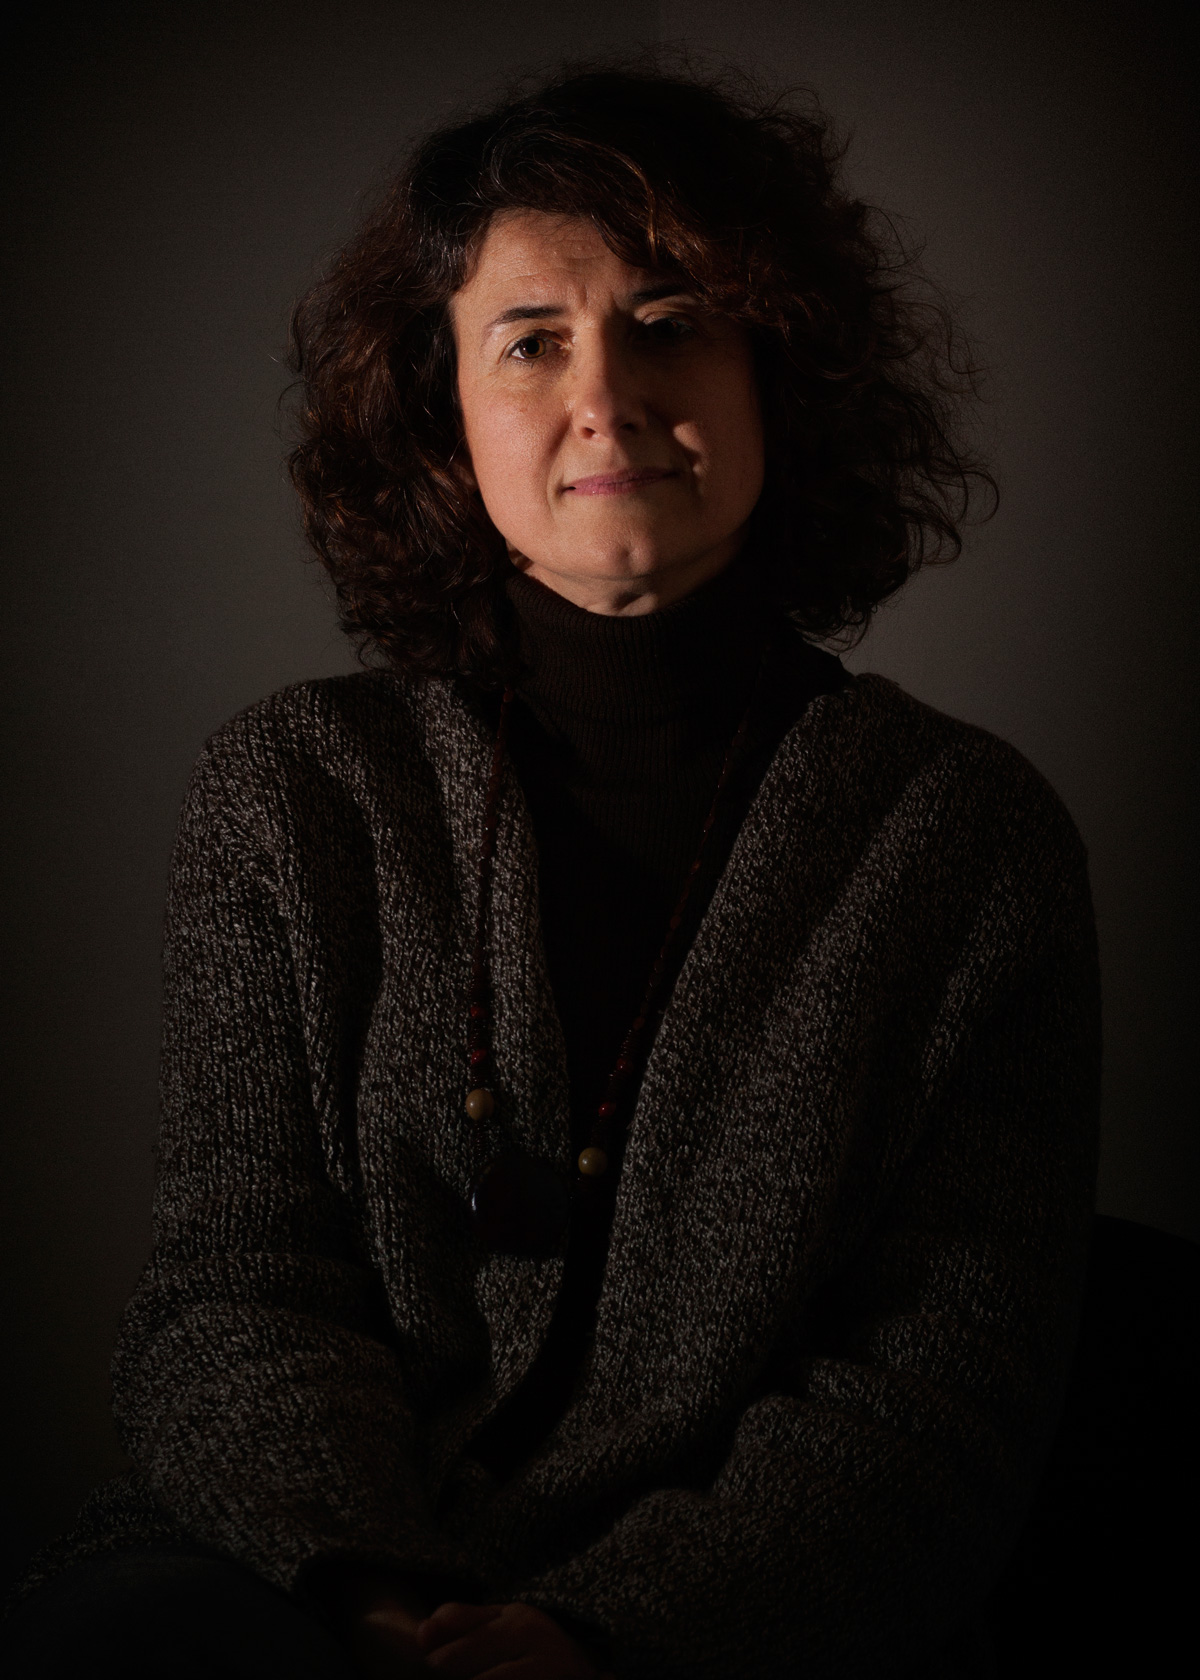 Özlem Özkan was dismissed from her position as associate professor.